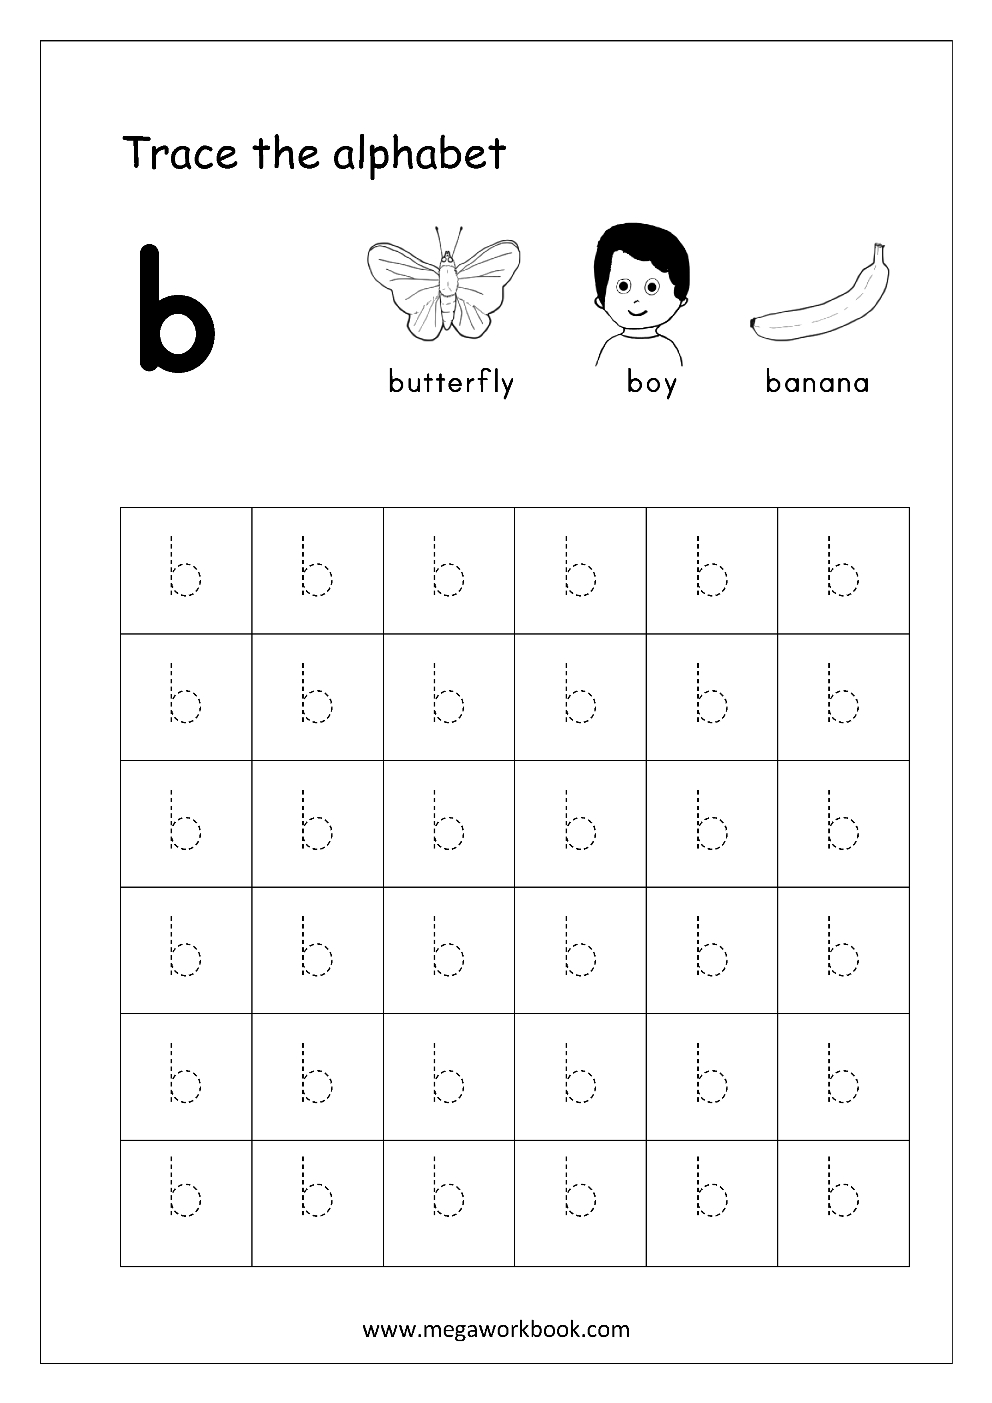 Free English Worksheets - Alphabet Tracing (Small Letters throughout Tracing Small Letters